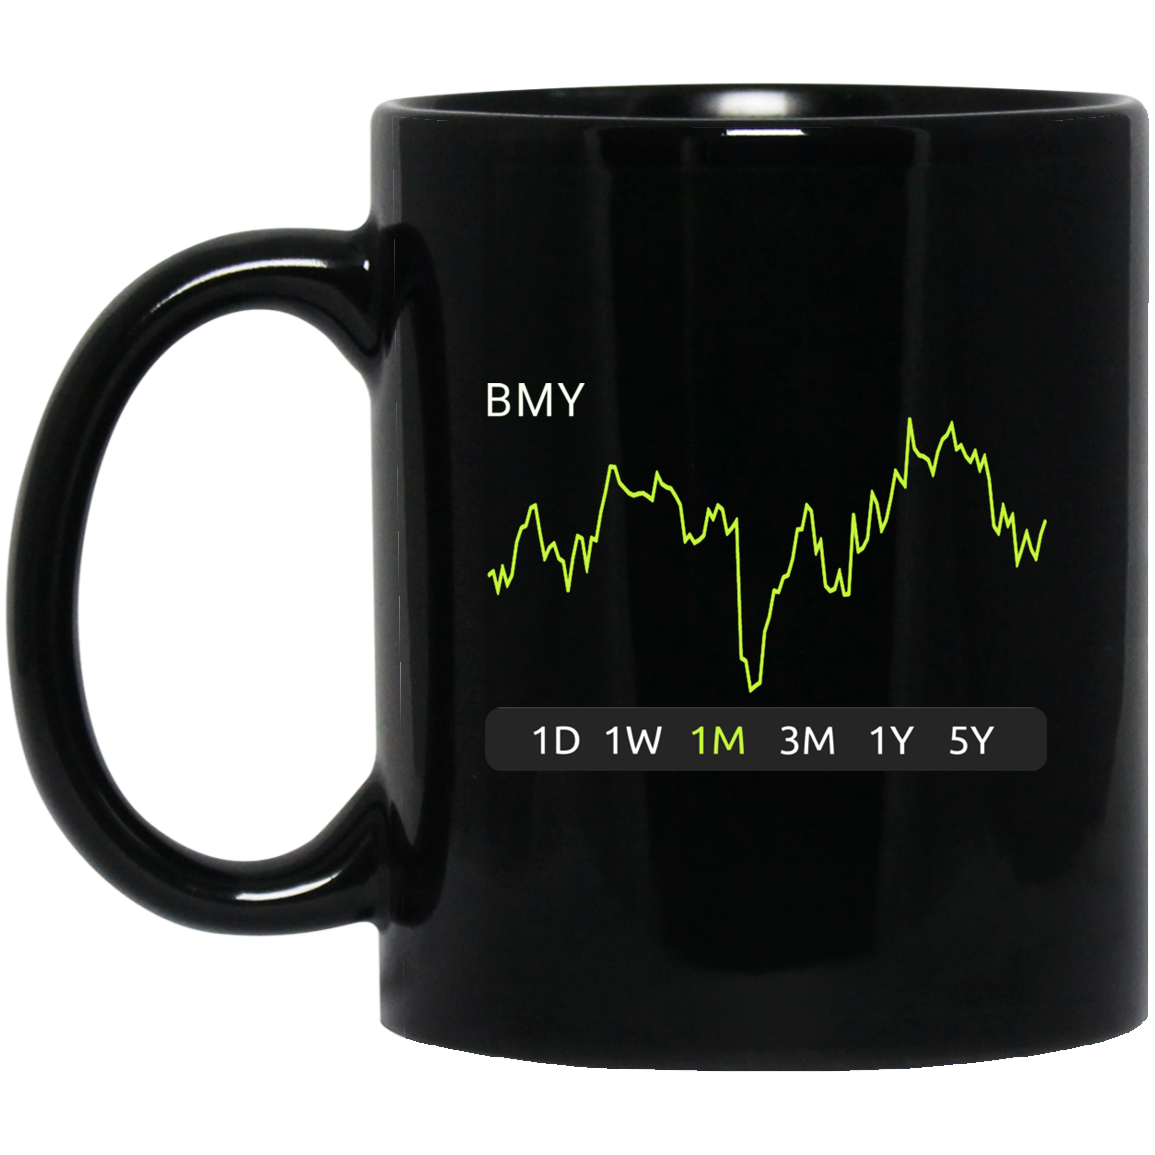 BMY Stock 1m Mug